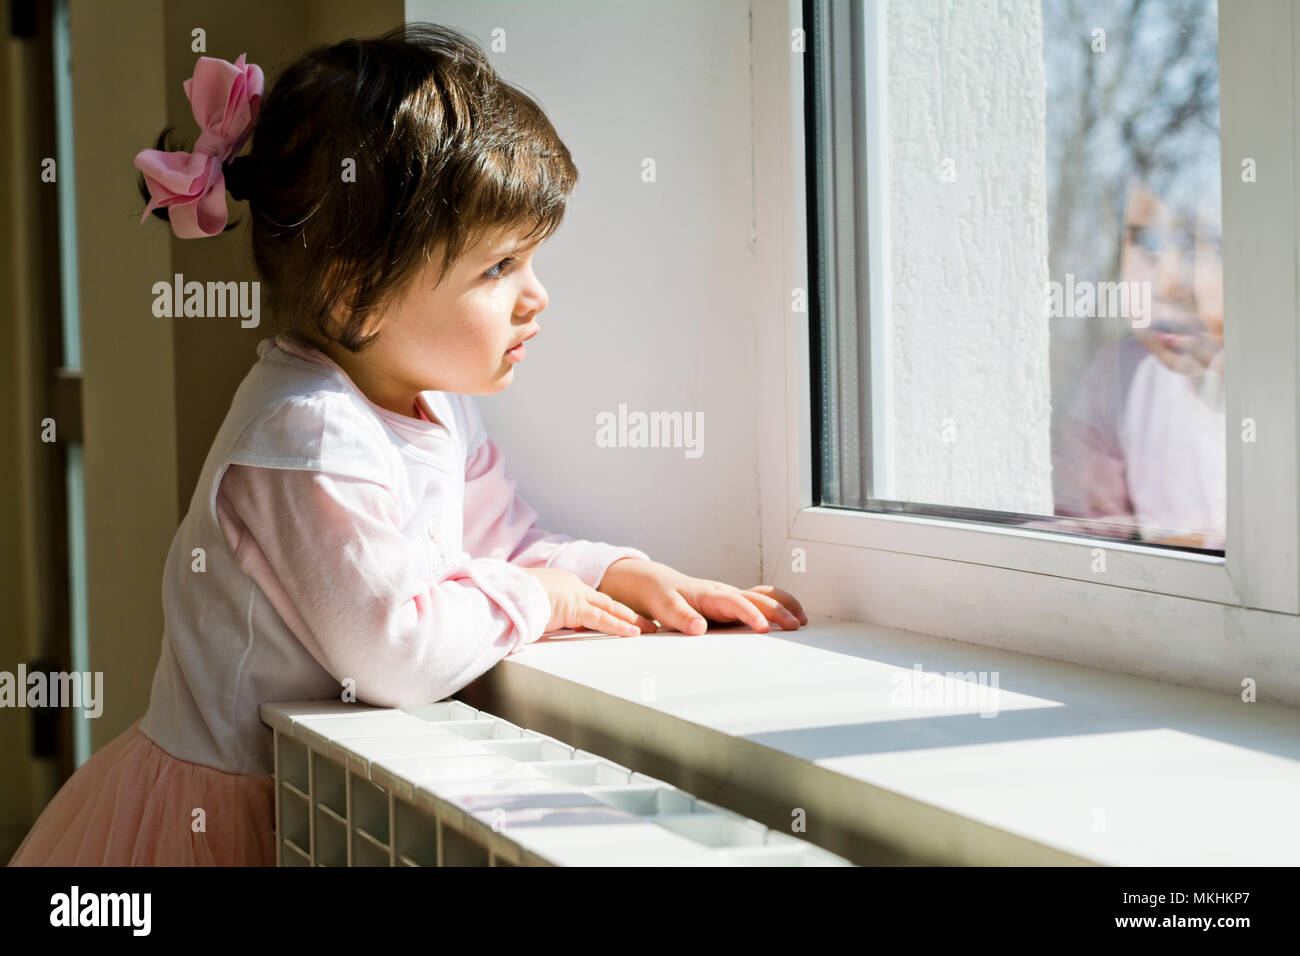 Girl Waiting at window Stock Photo